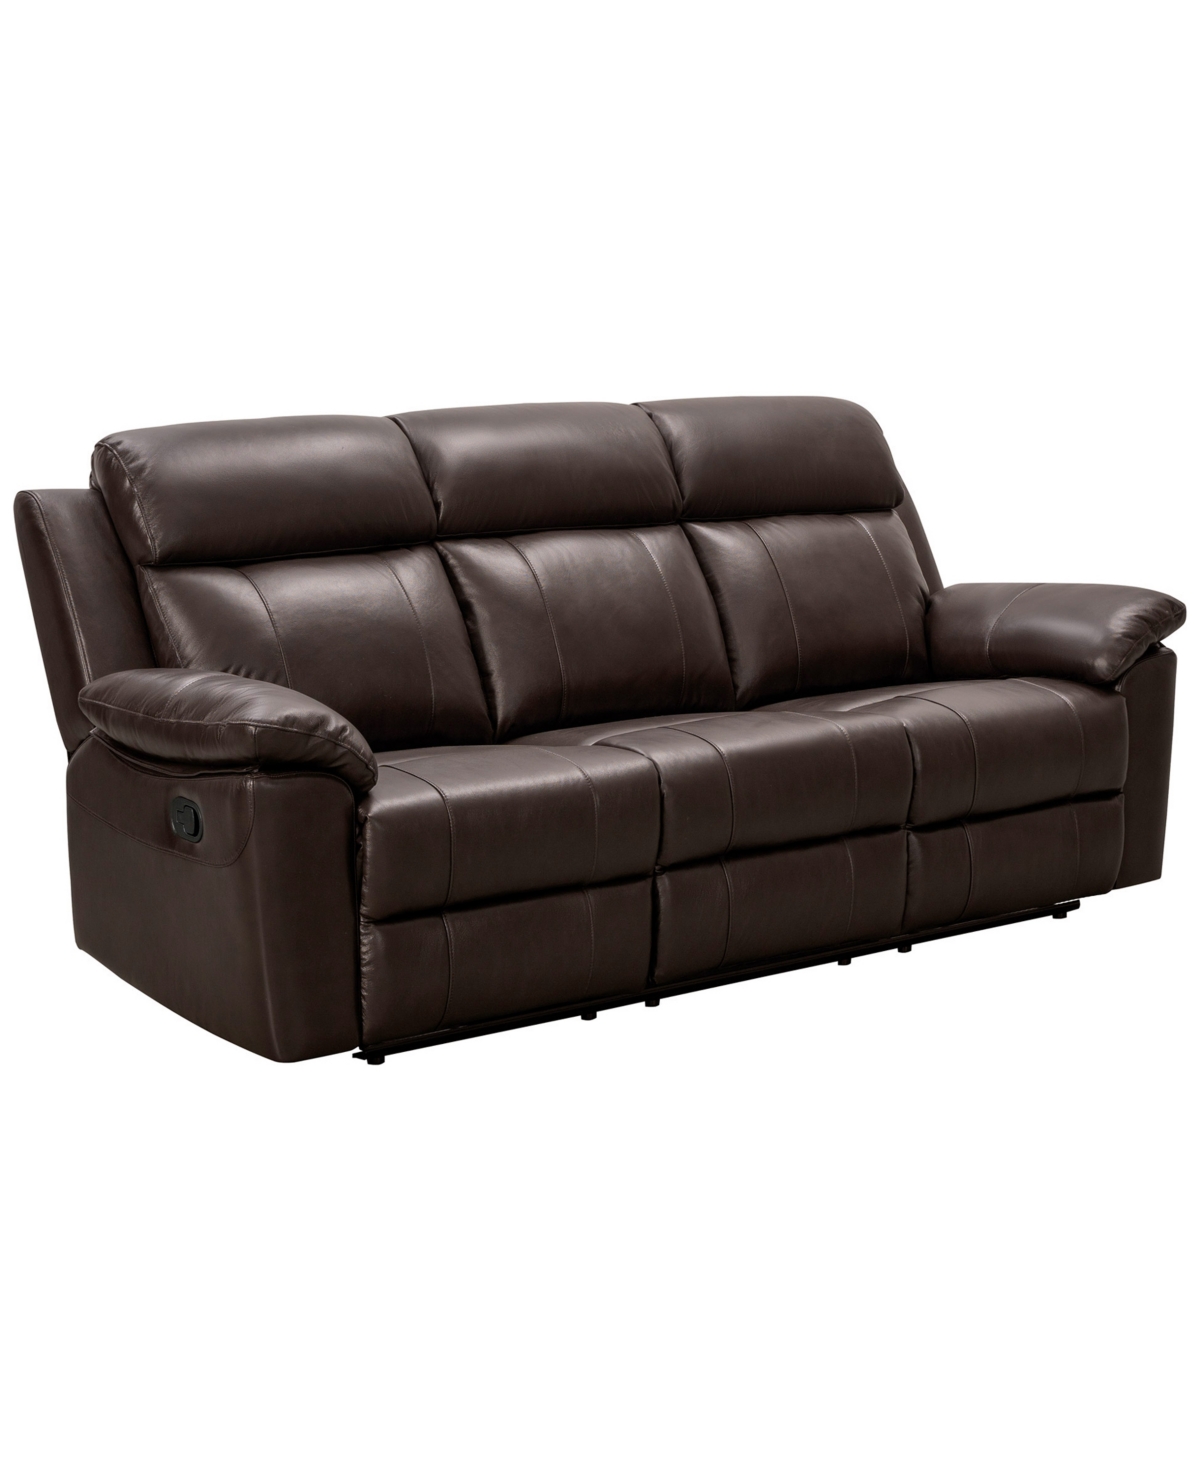 Abbyson Living Braylen 89.5" Top Grain Leather Reclining Sofa In Dark Brown